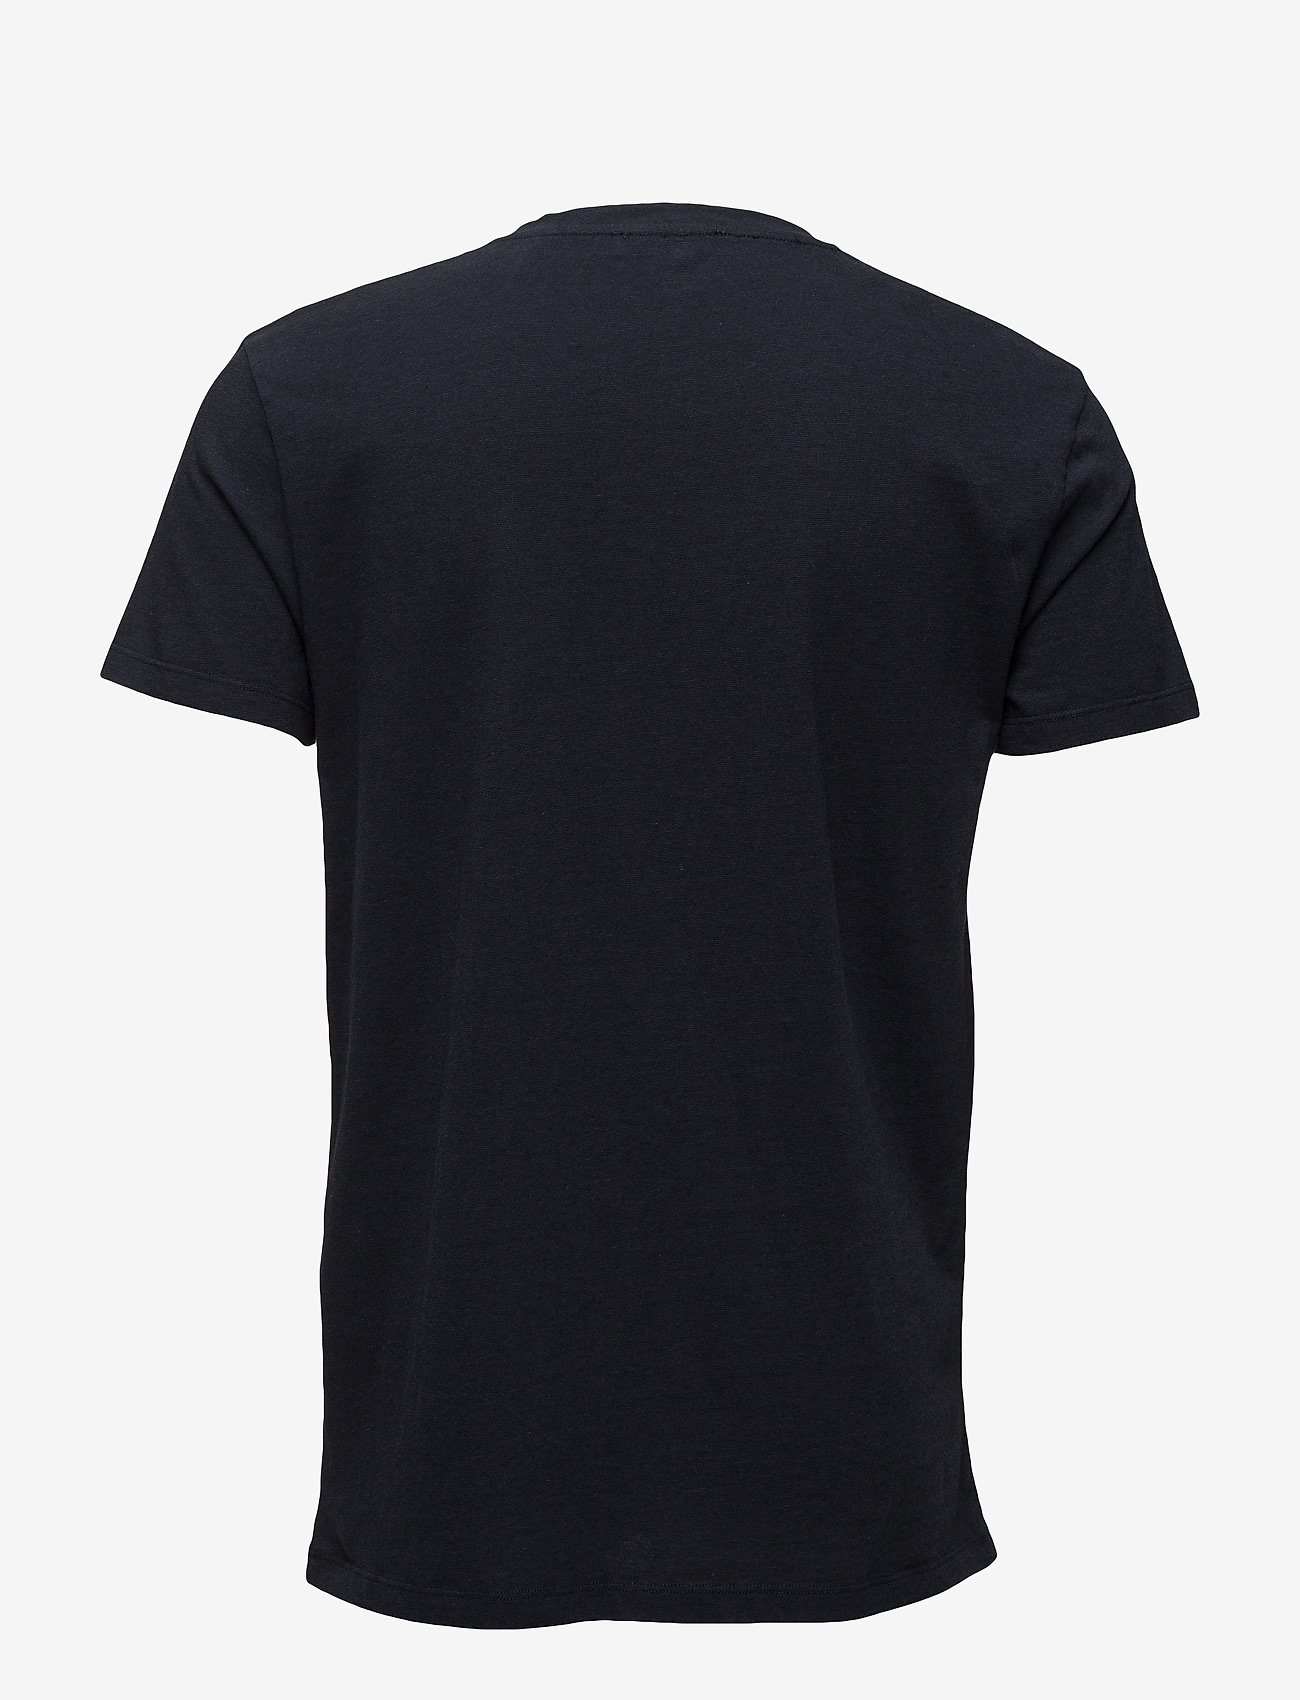 Samsøe Samsøe - Kronos o-n stripe 273 - basic t-shirts - eclipseblack st - 1